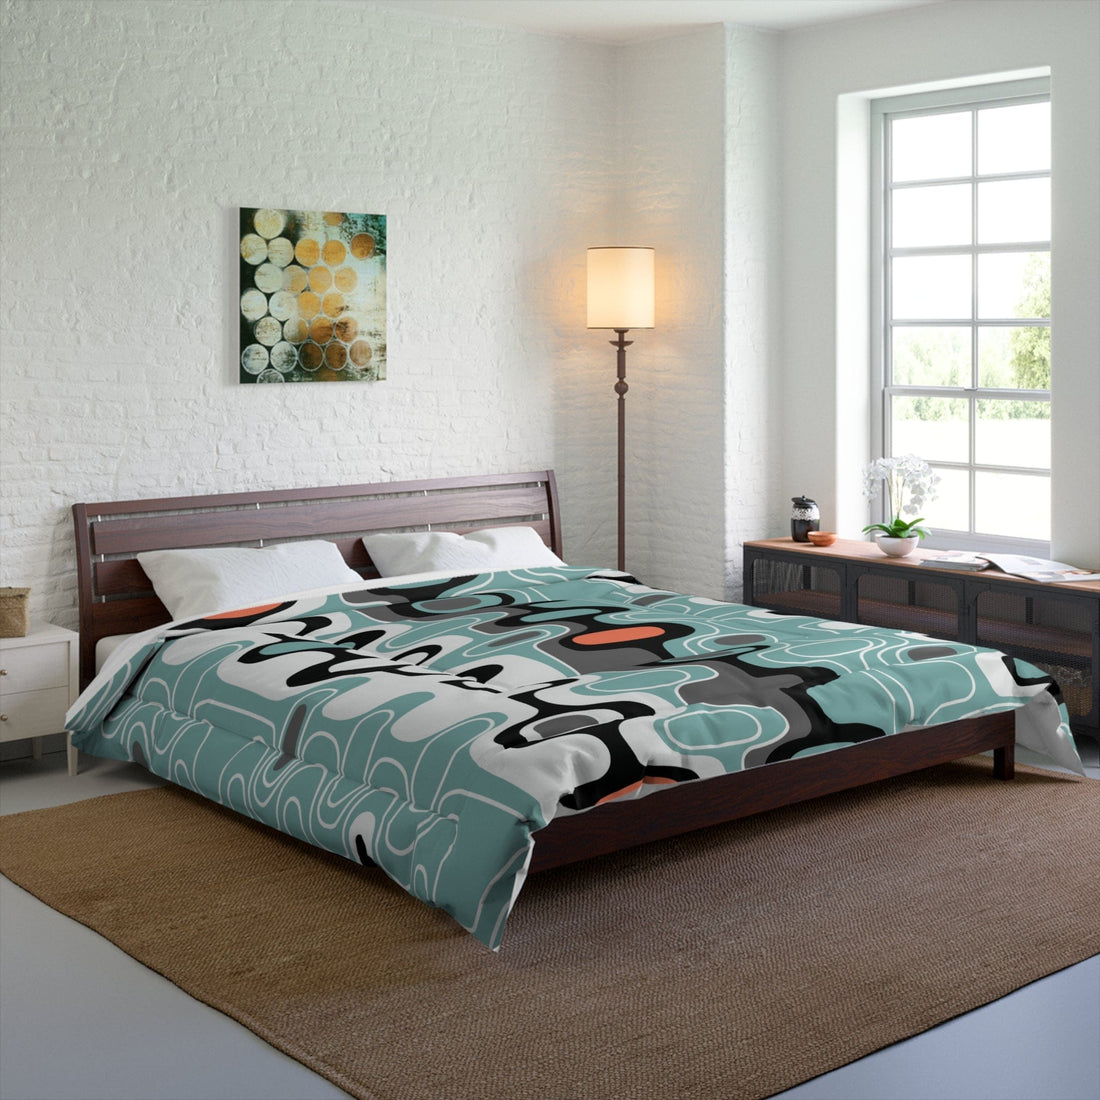 Kate McEnroe New York Retro Geometric Abstract Mid Century Modern Comforter Comforters 104&quot; × 88&quot; 18770635388039353903